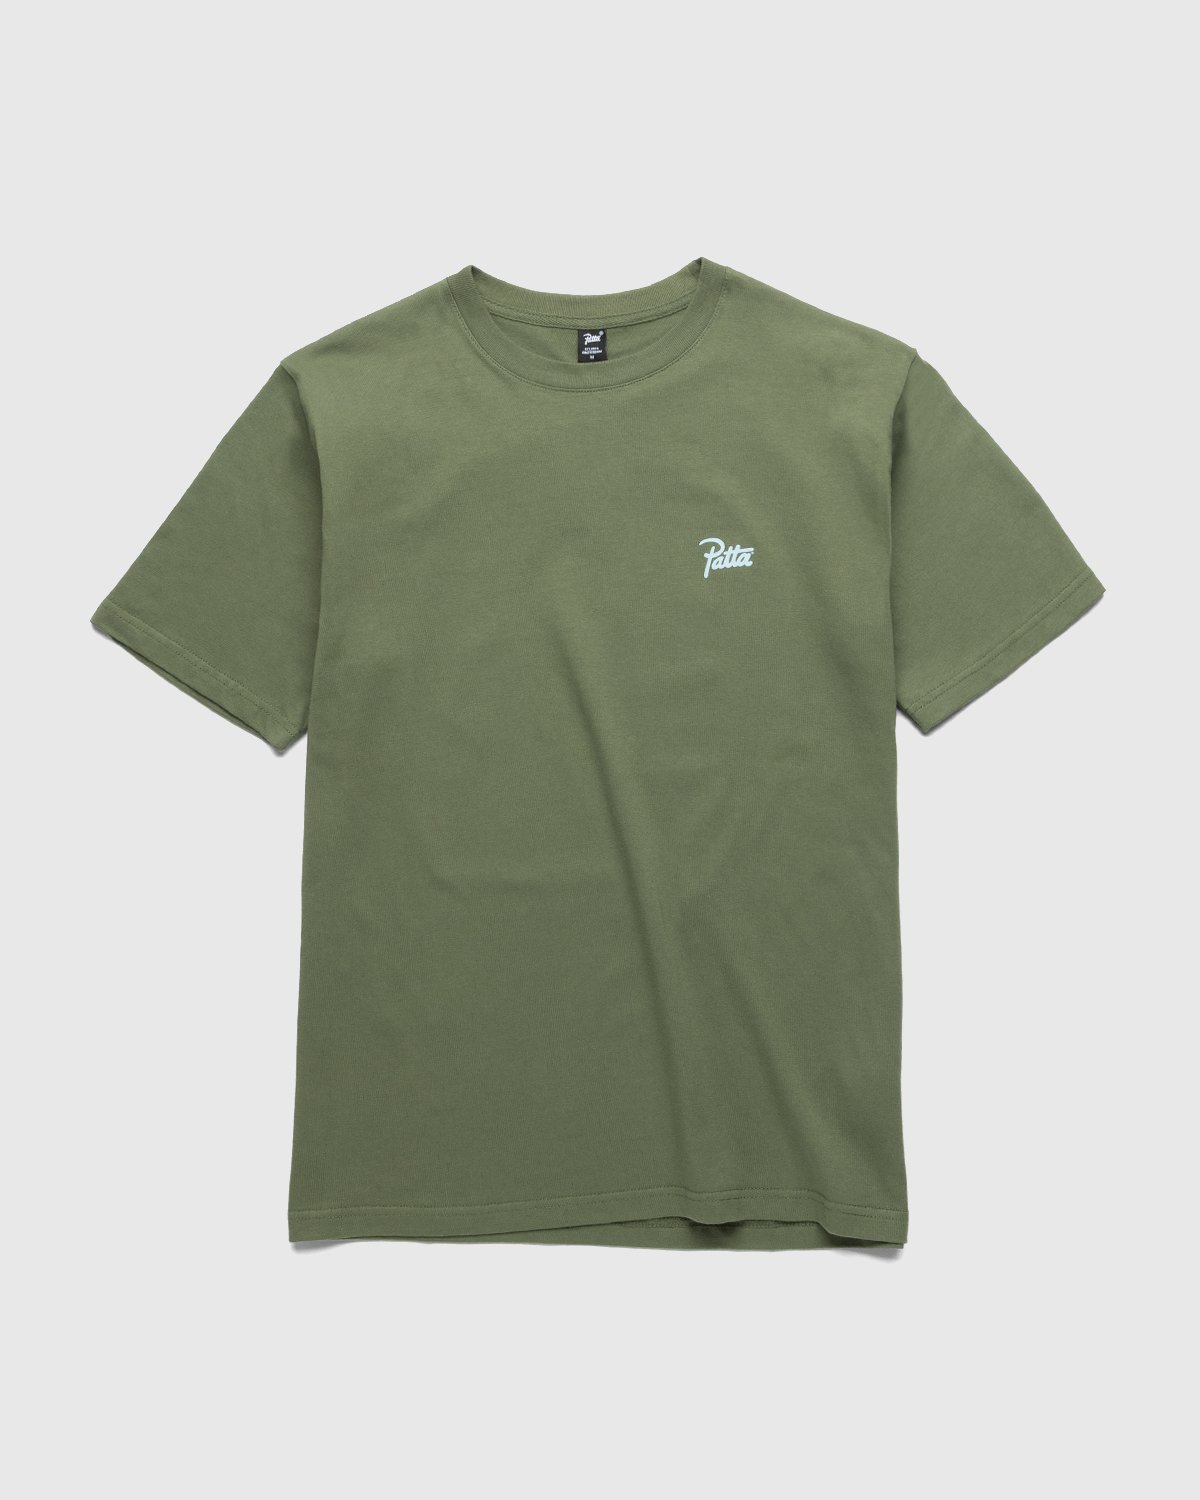 Patta - Reminisce T-Shirt Olivine - Clothing - Green - Image 1